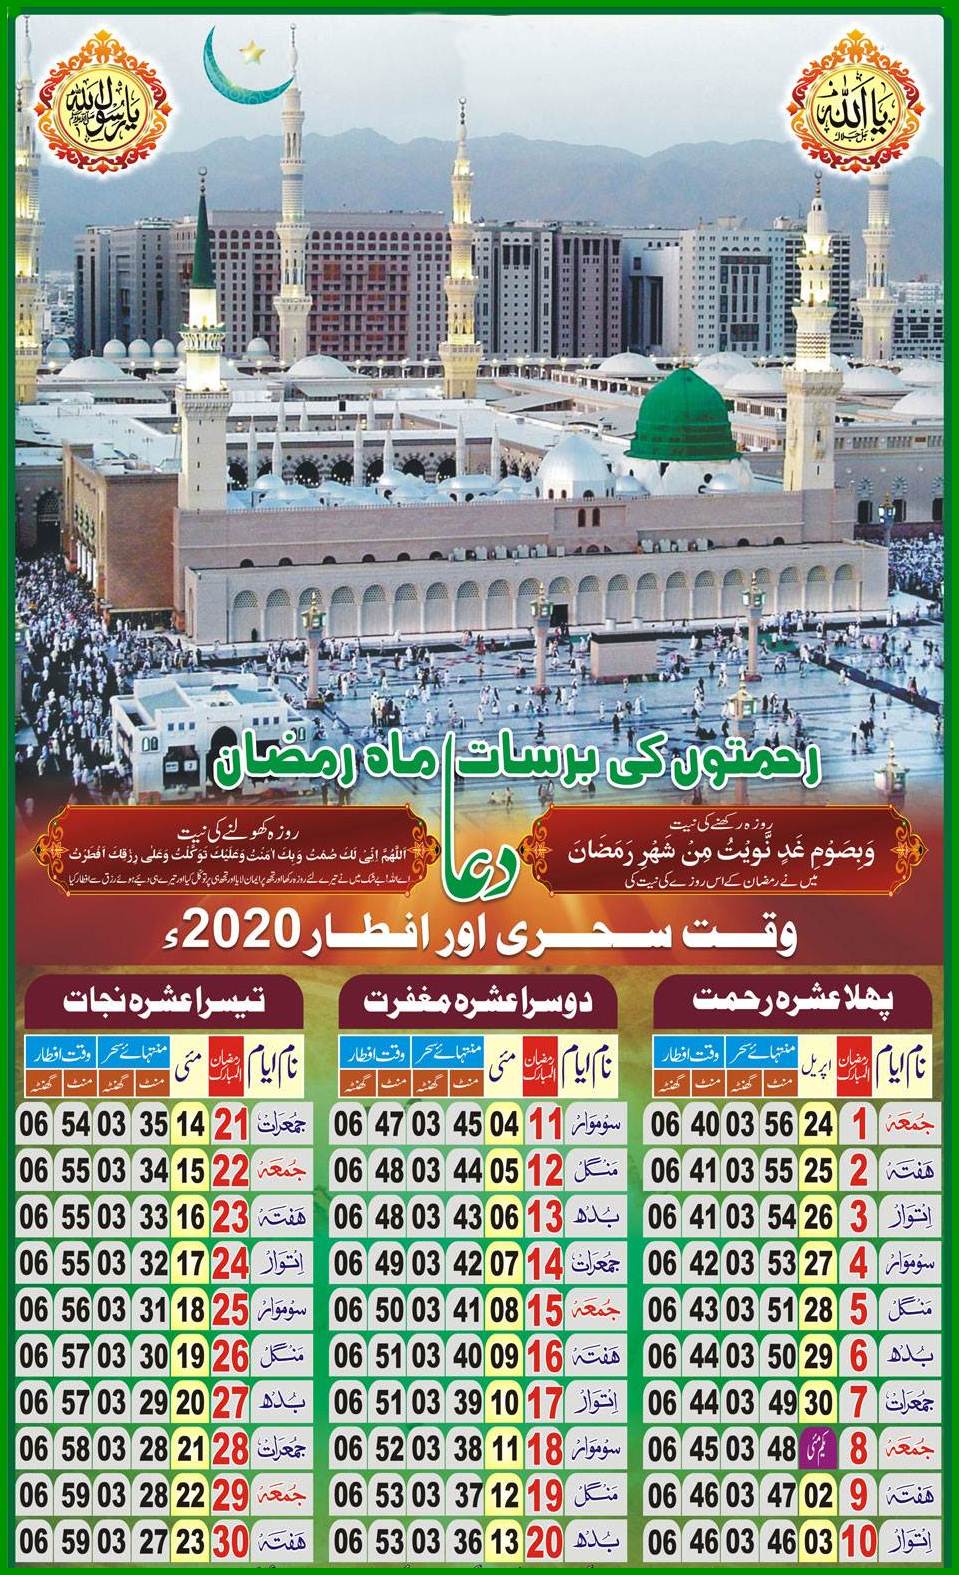 Ramadan Schedule 2020 Pakistan, Ramazan Calendar 1441 Hijri (Shia-Sunni)